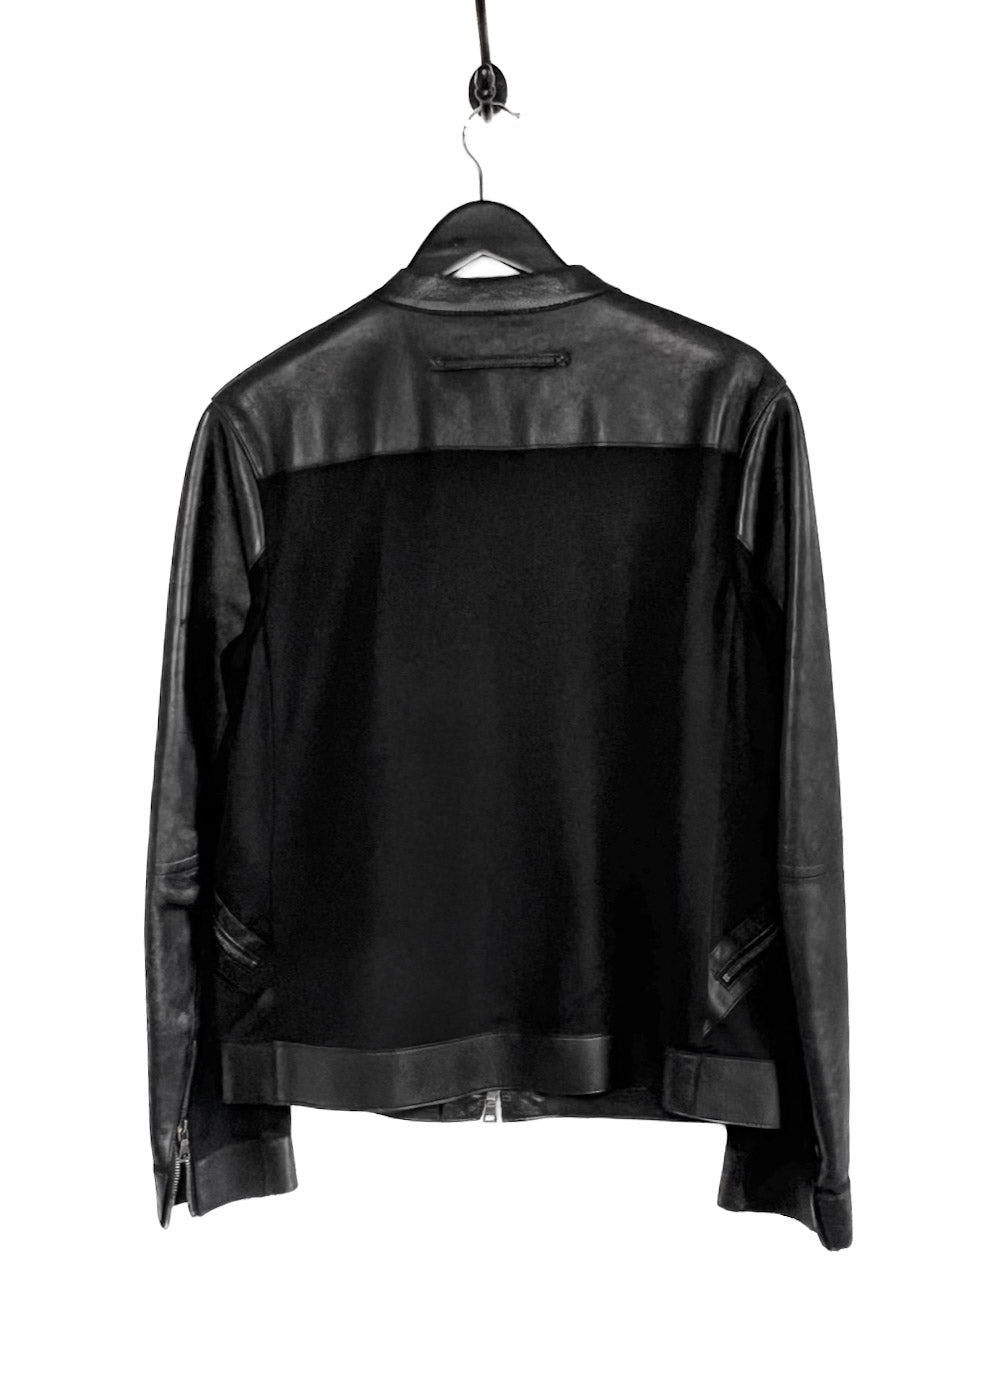 Manteau style moto en cuir noir Prada avec insert en nylon